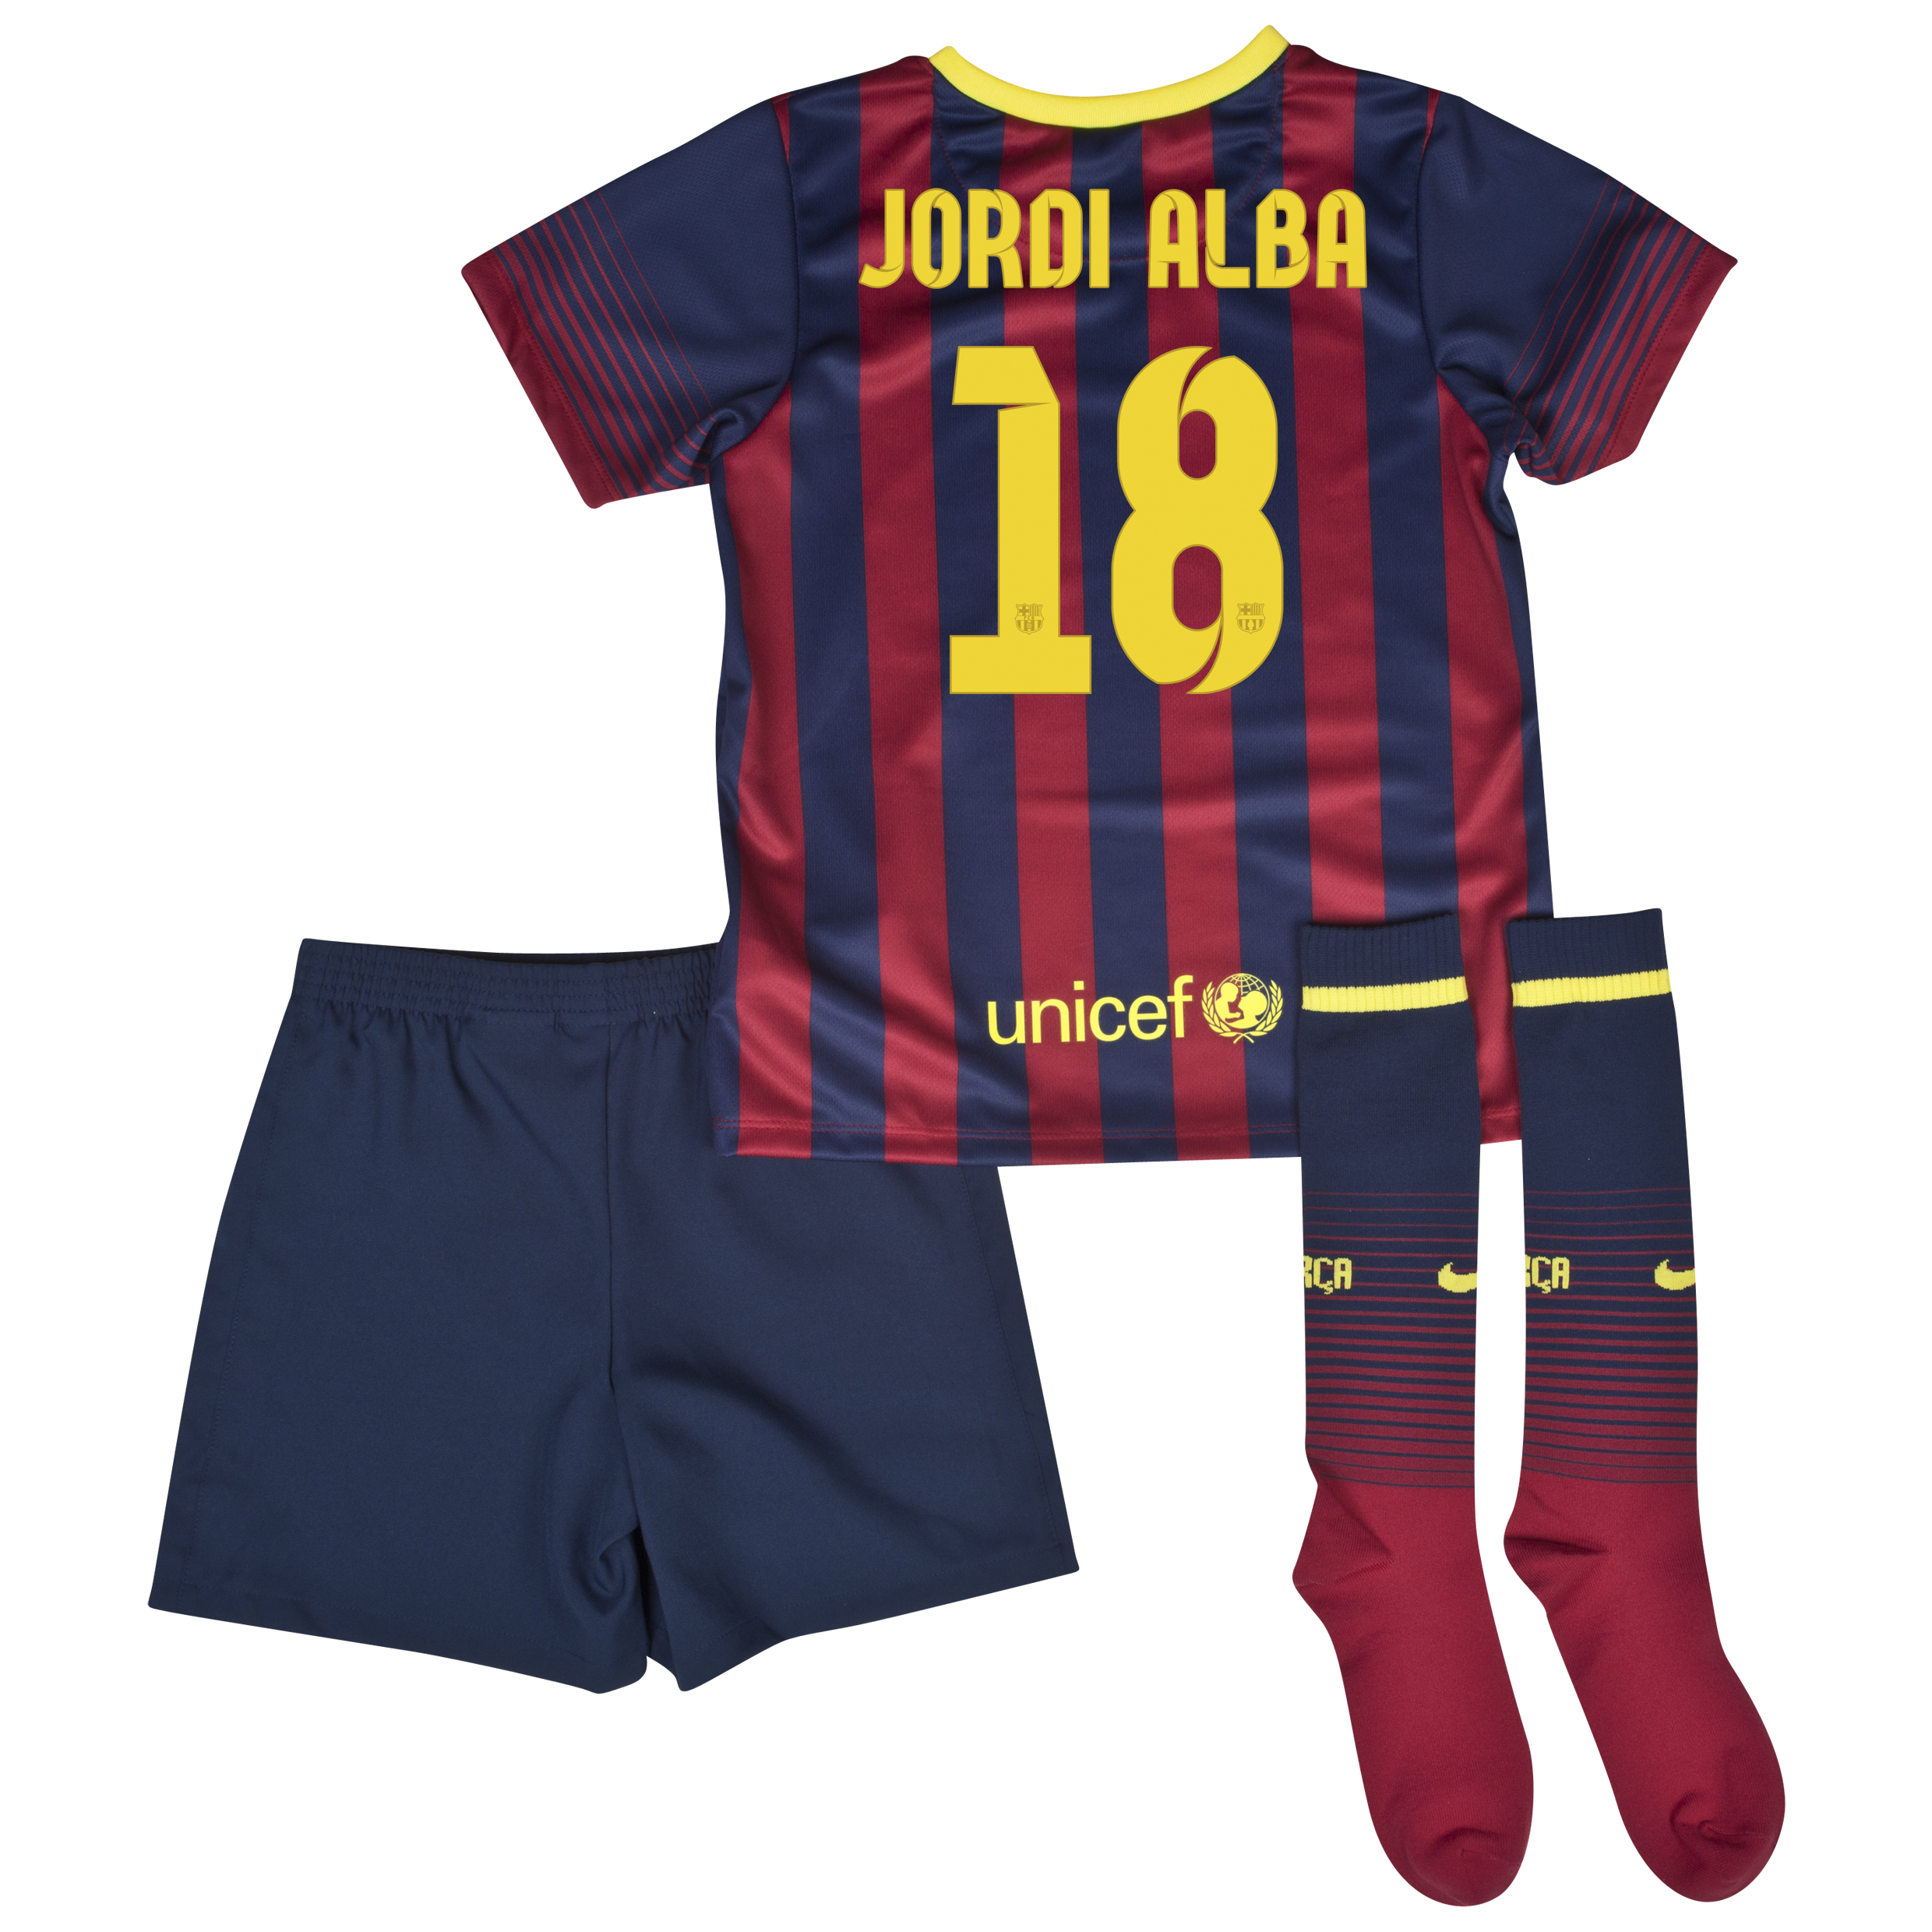 Barcelona Home Kit 2013/14 - Little Boys with Jordi Alba 18 printing